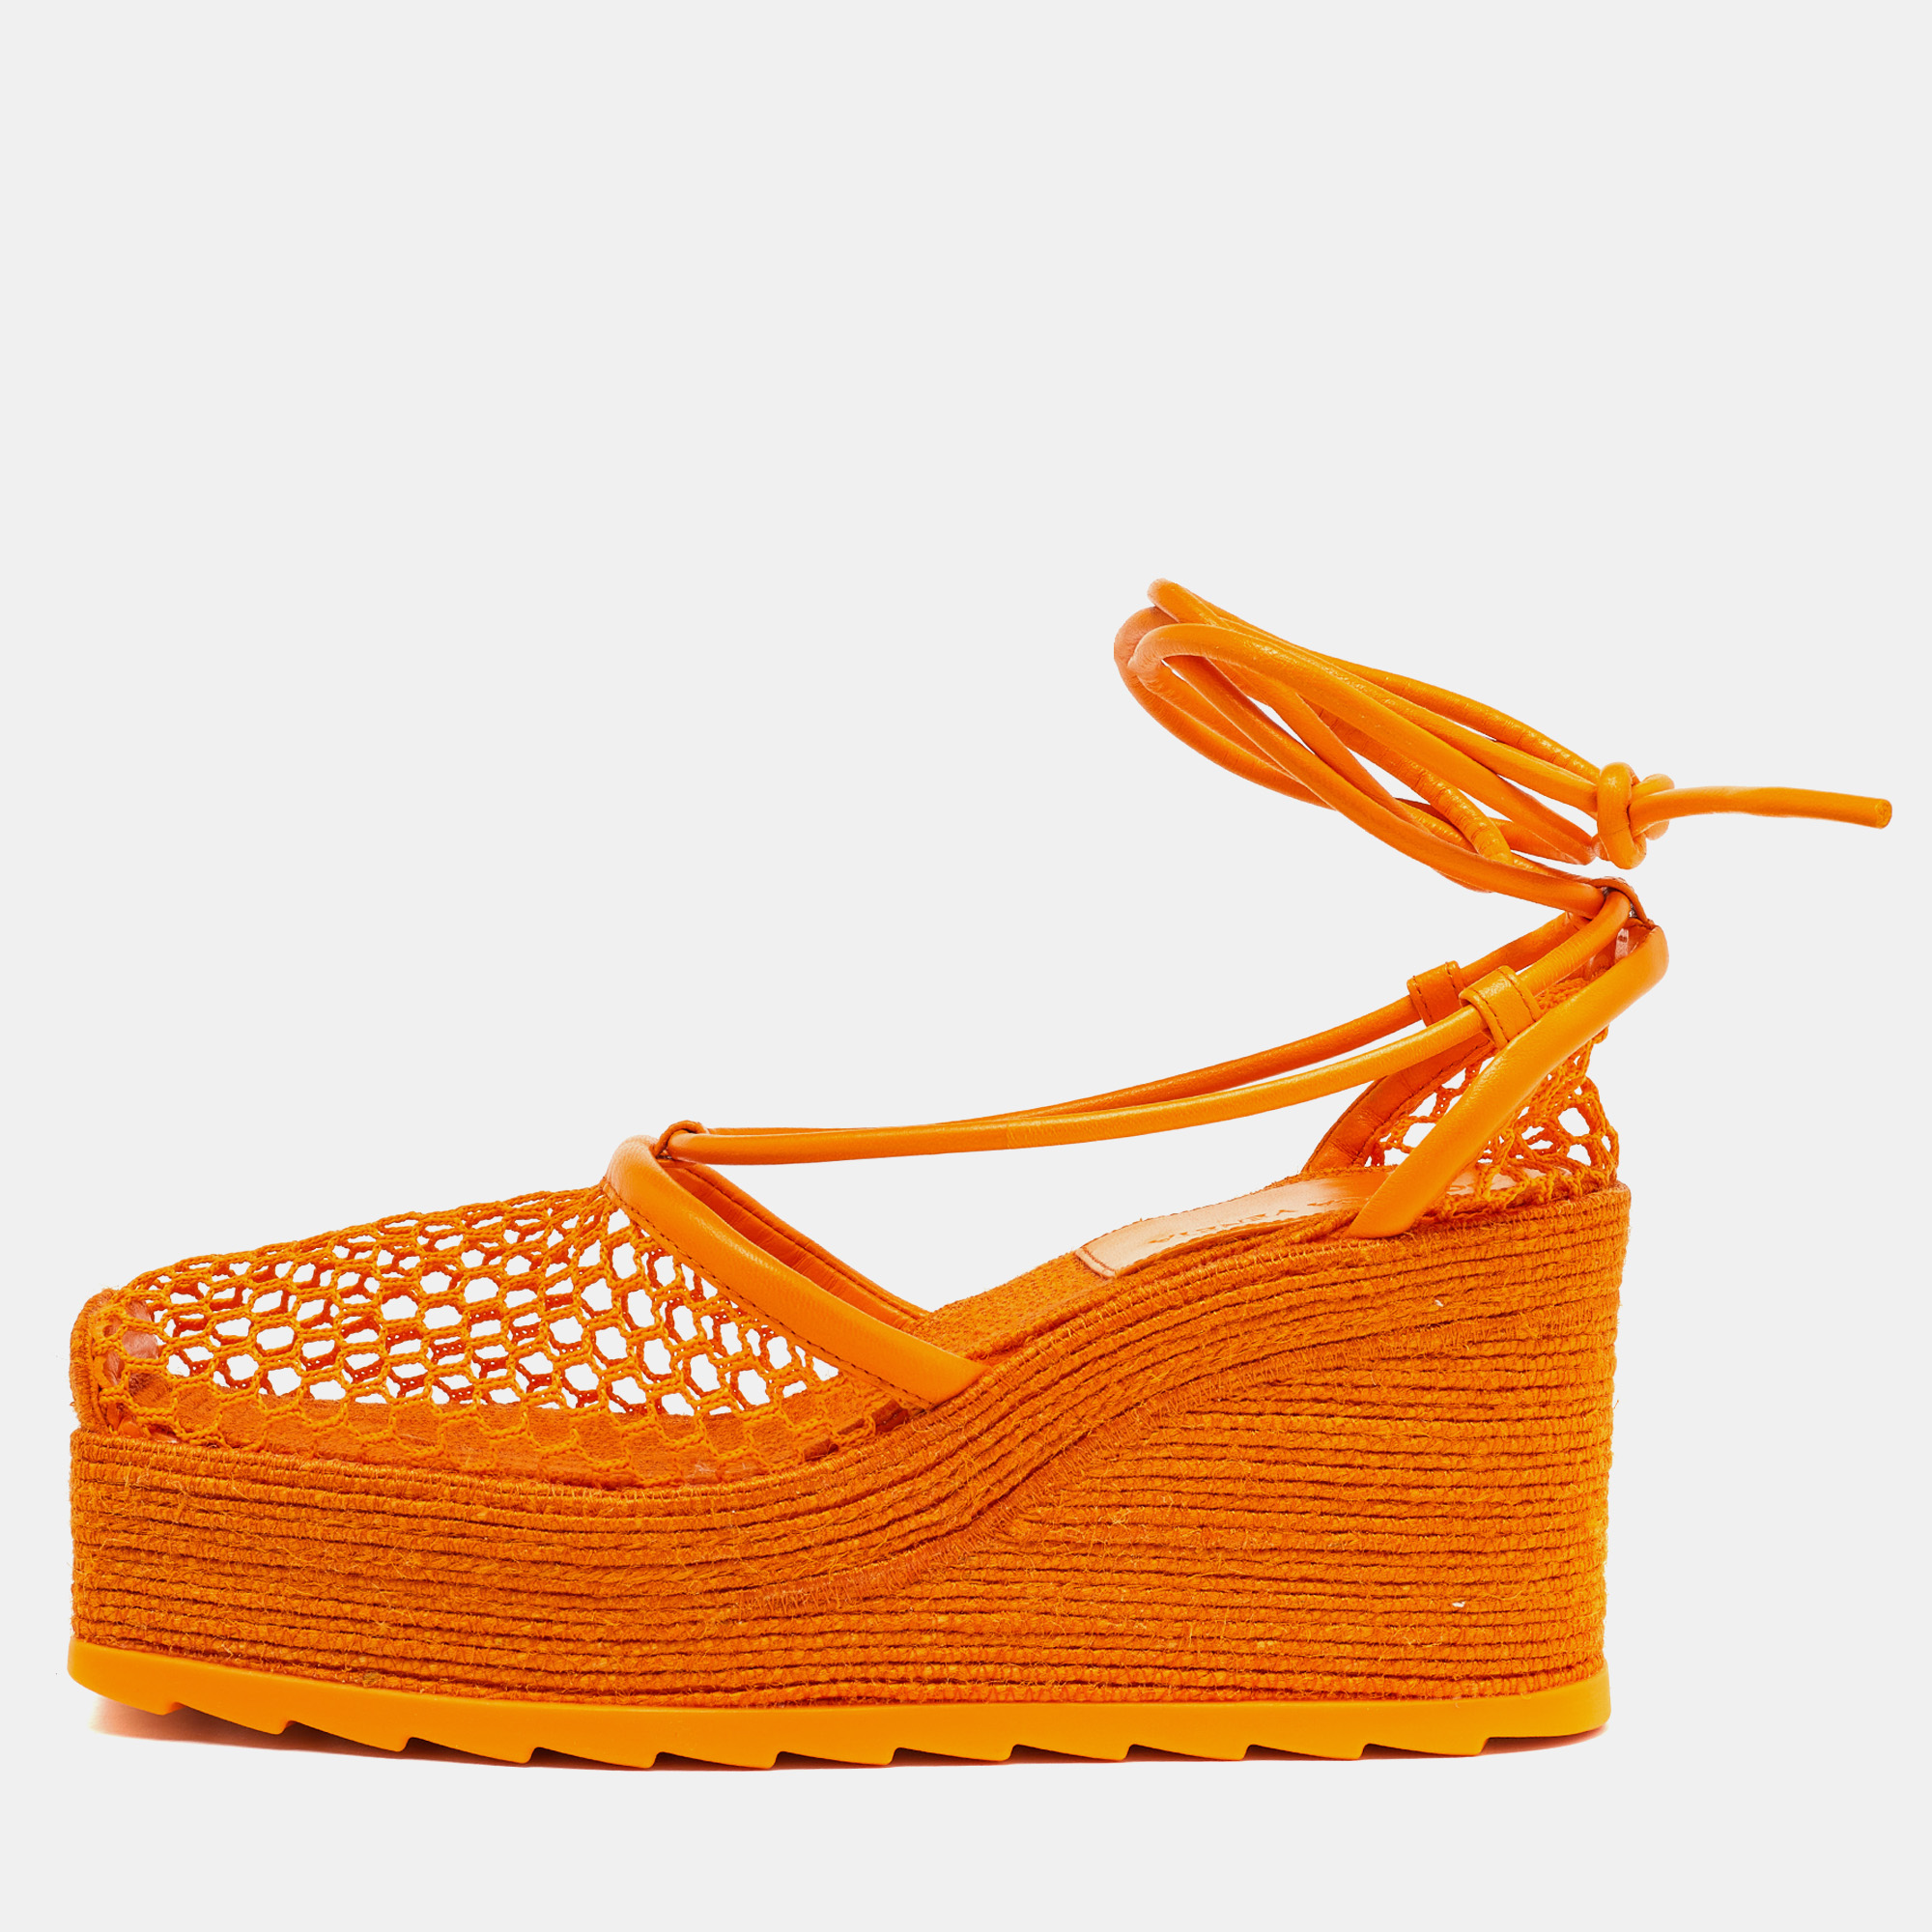 Bottega veneta orange mesh and leather lace-up wedge platform espadrilles ankle tie sandals size 38